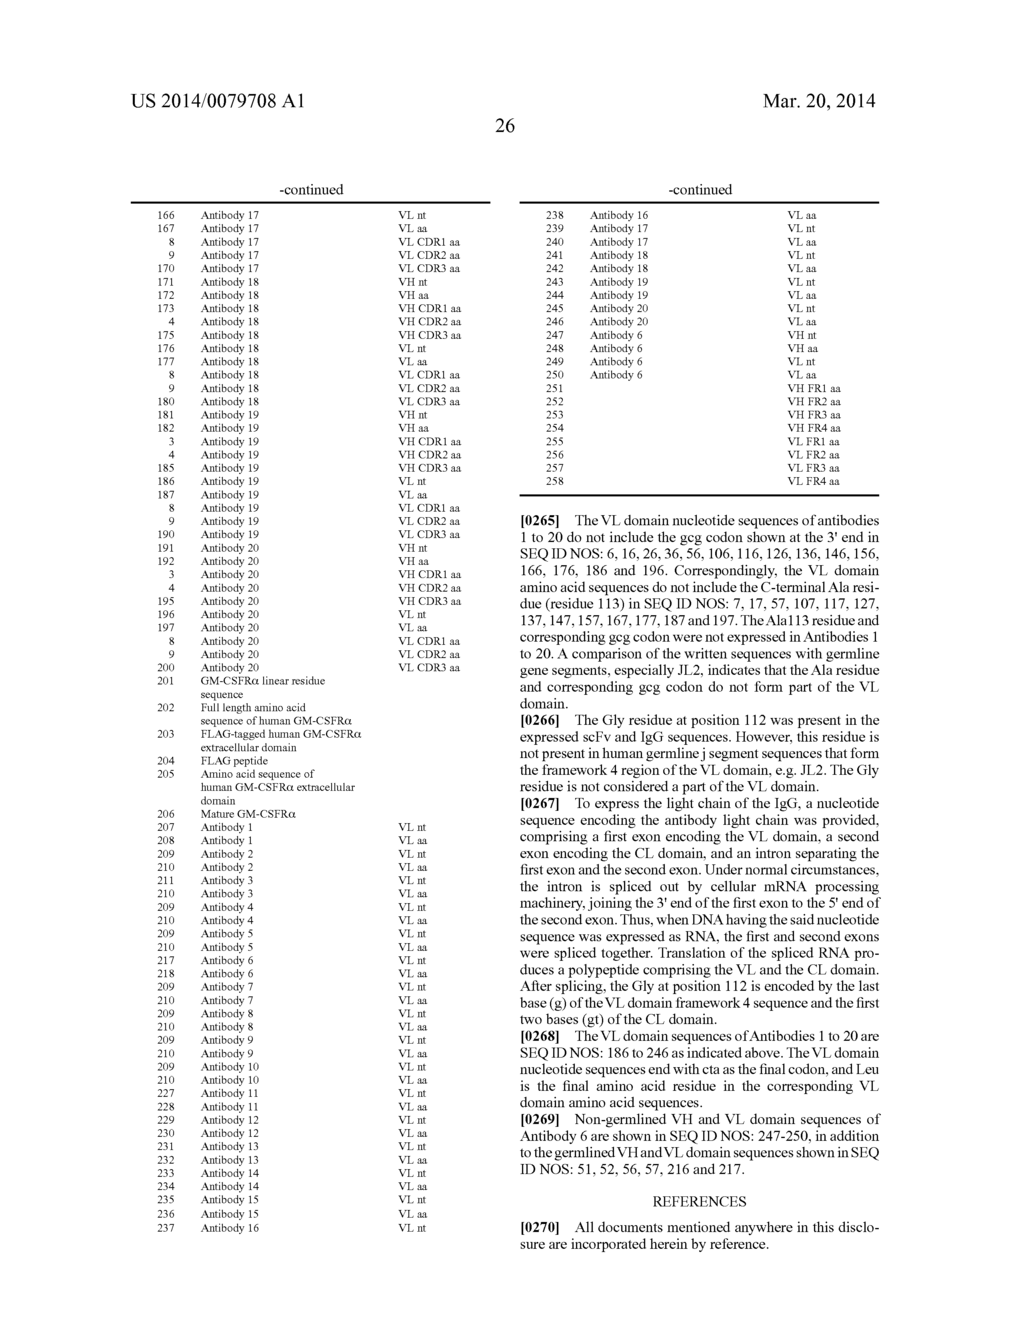 ANTIBODY MOLECULE FOR HUMAN GM-CSF RECEPTOR ALPHA - diagram, schematic, and image 34